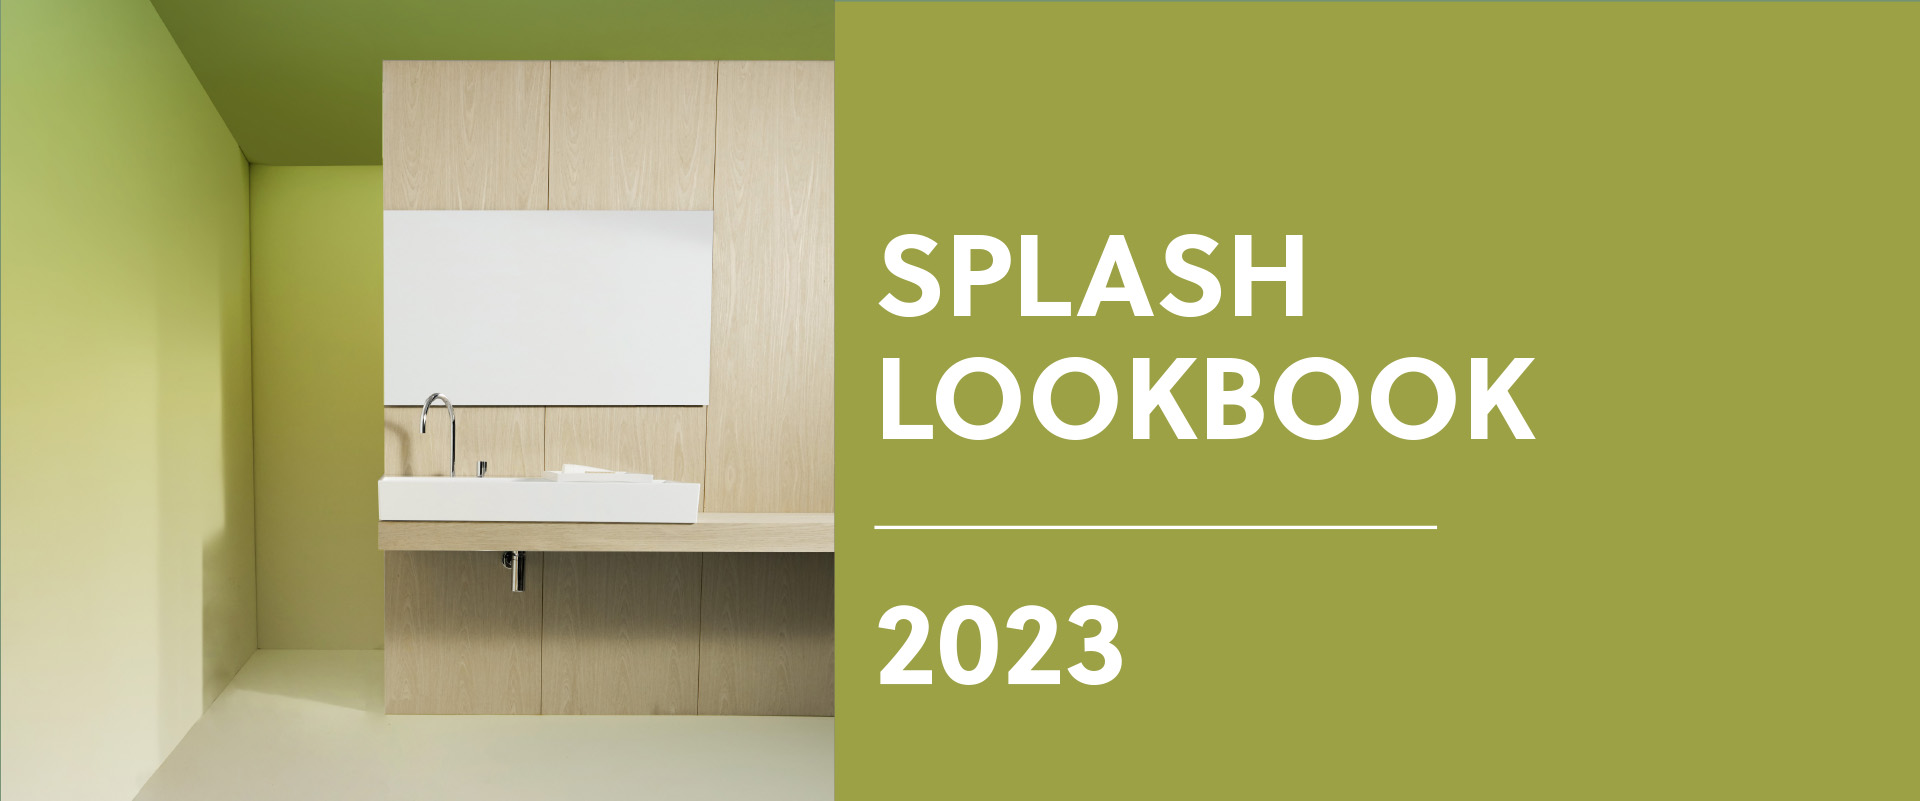 SPLASH Lookbook Banner 2023